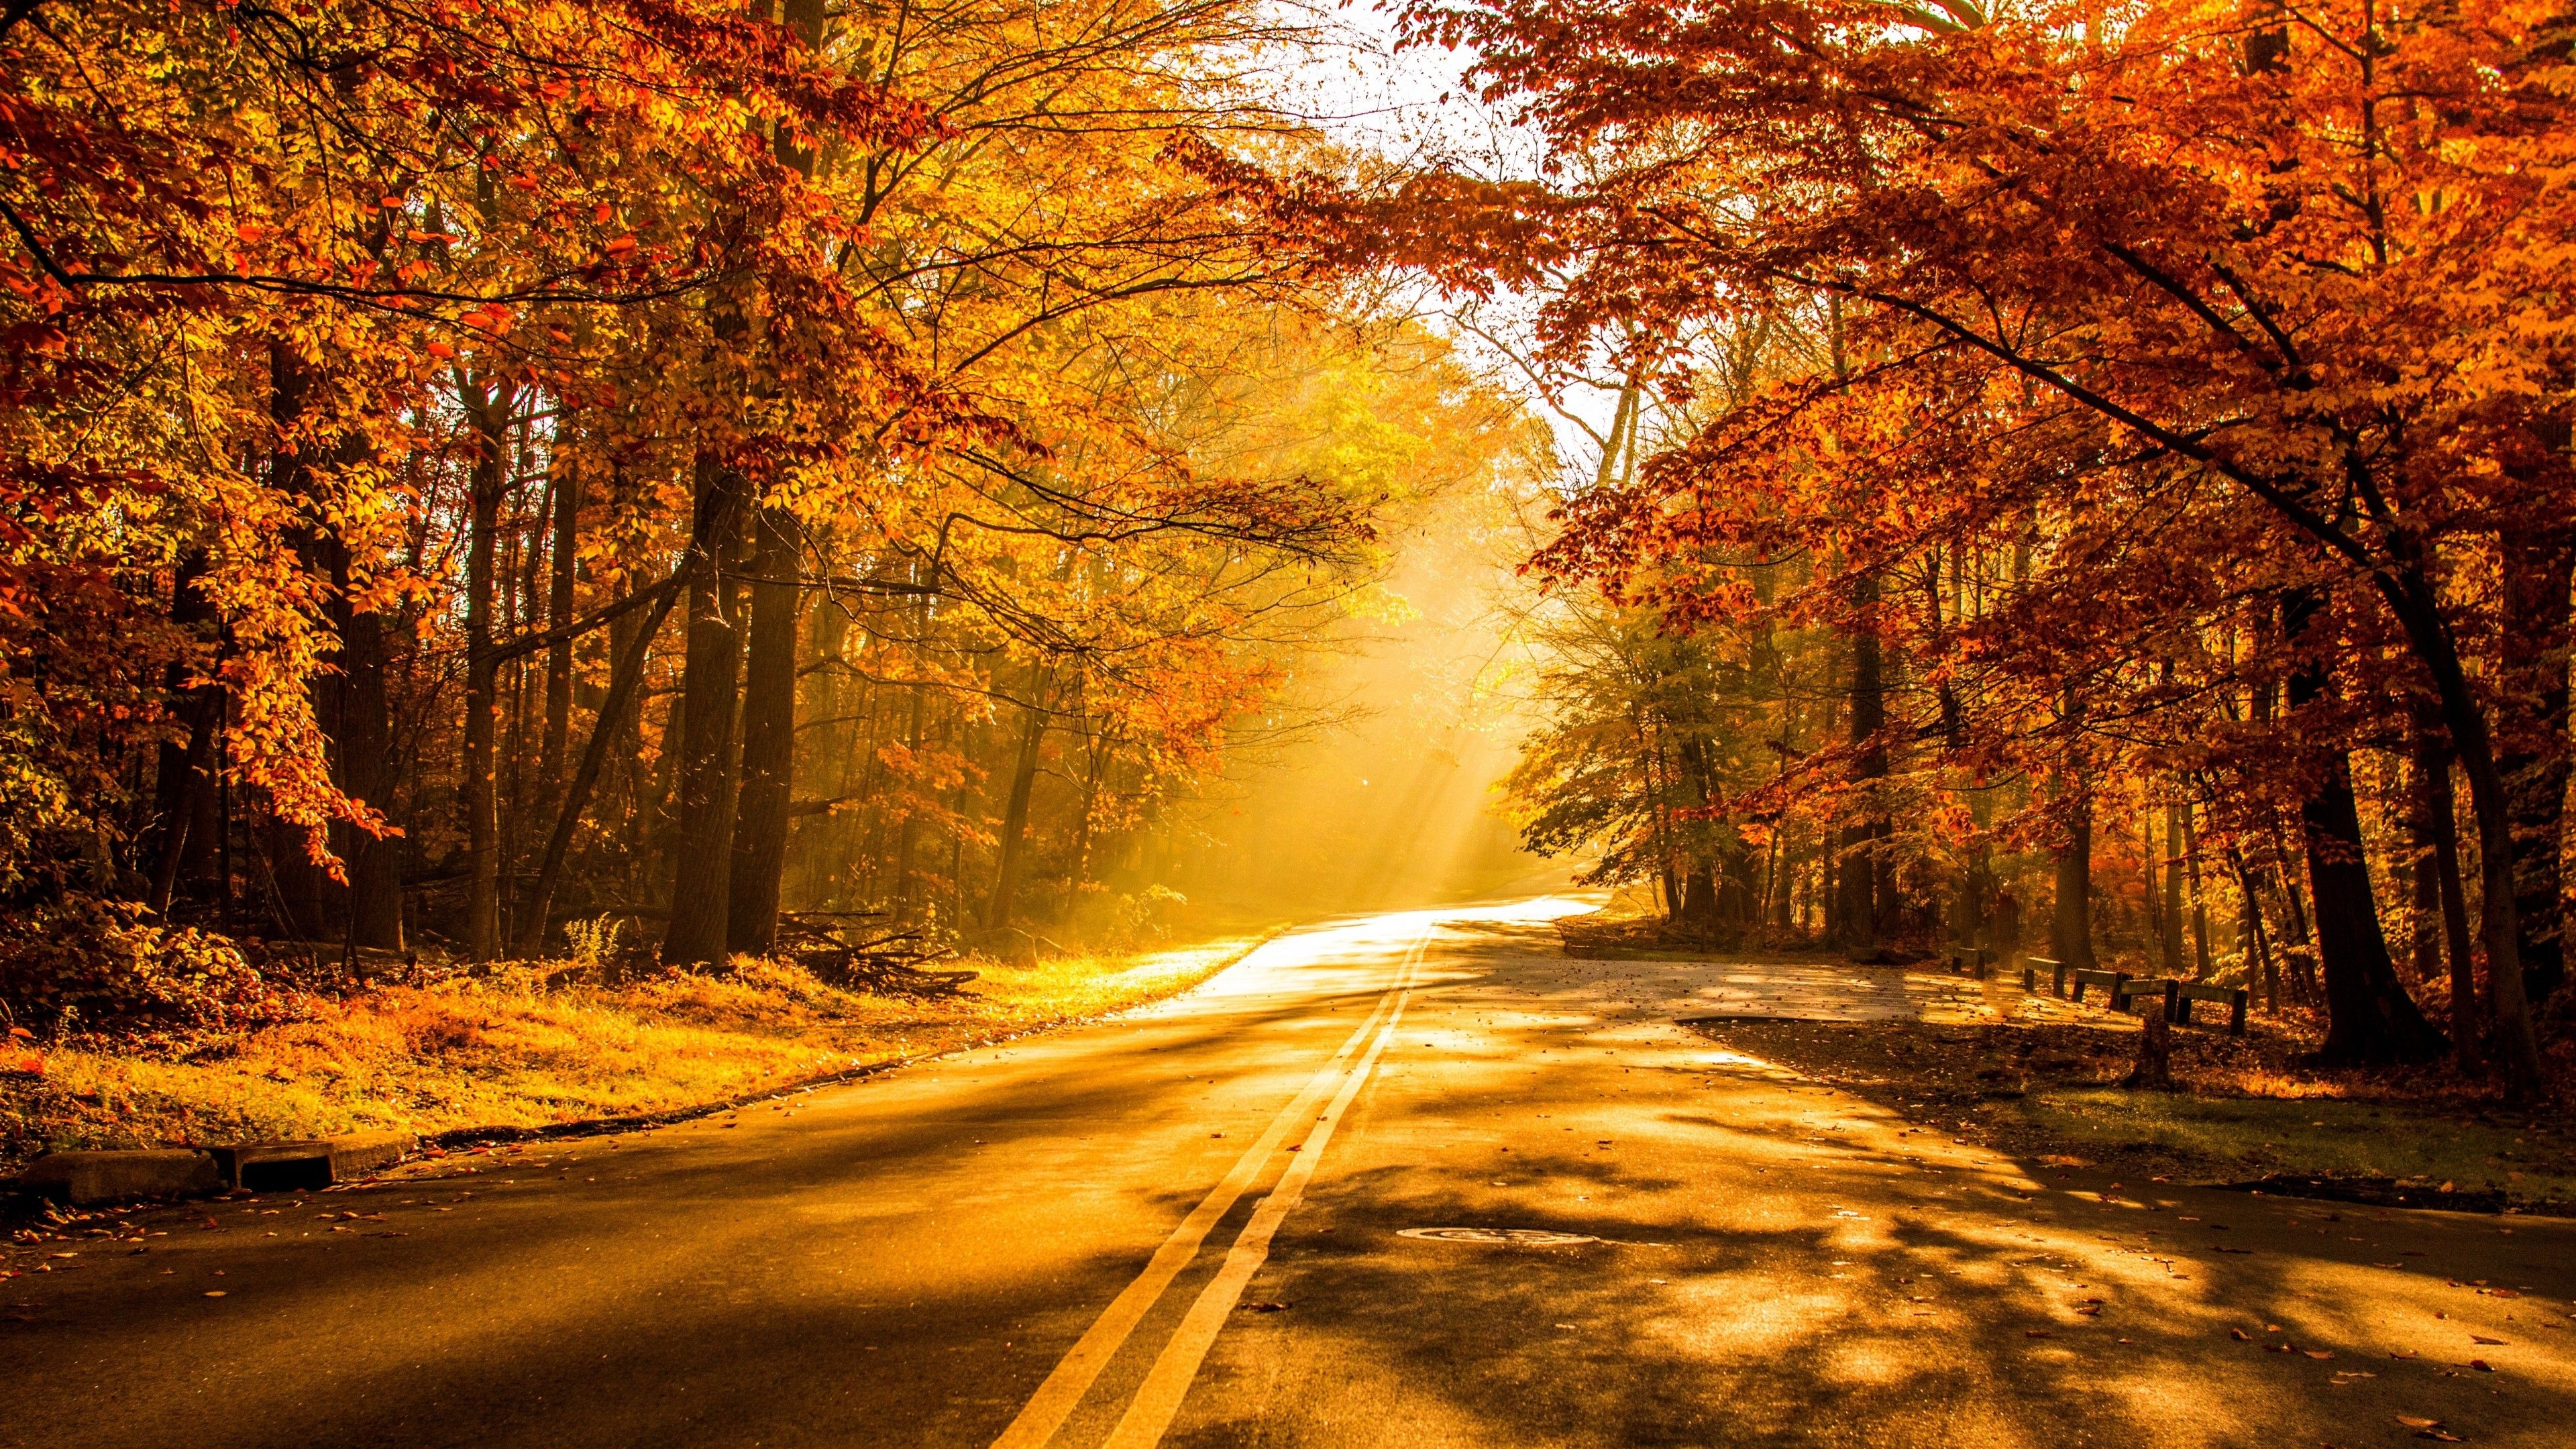 Autumn season, 4K resolution, Leaves changing, Tranquil scenery, Natural beauty, 3840x2160 4K Desktop